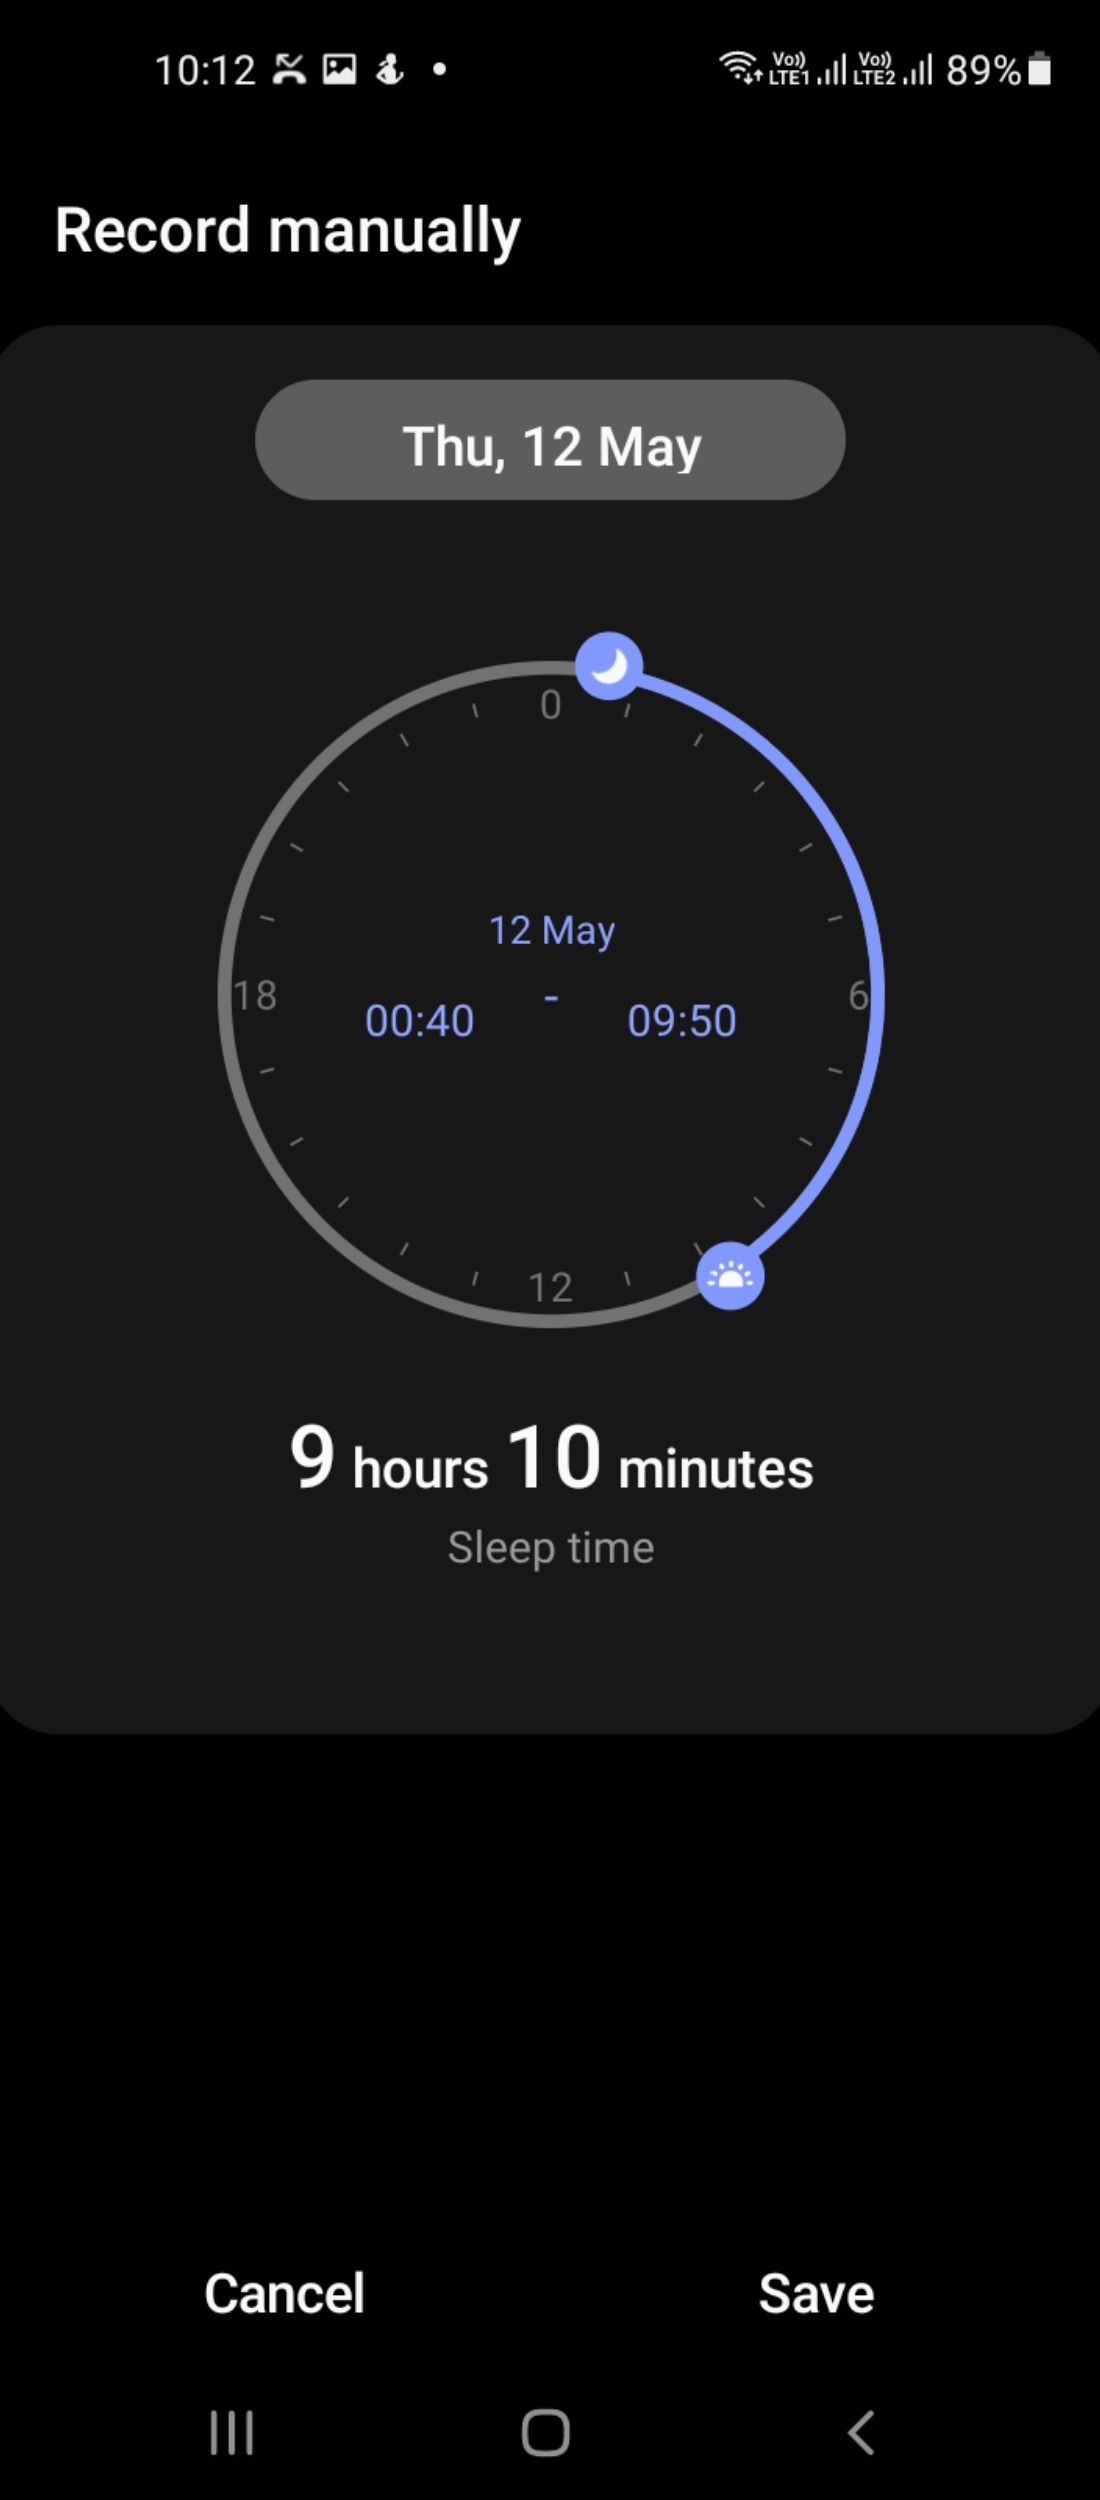 Sleep tracking in Samsung Health